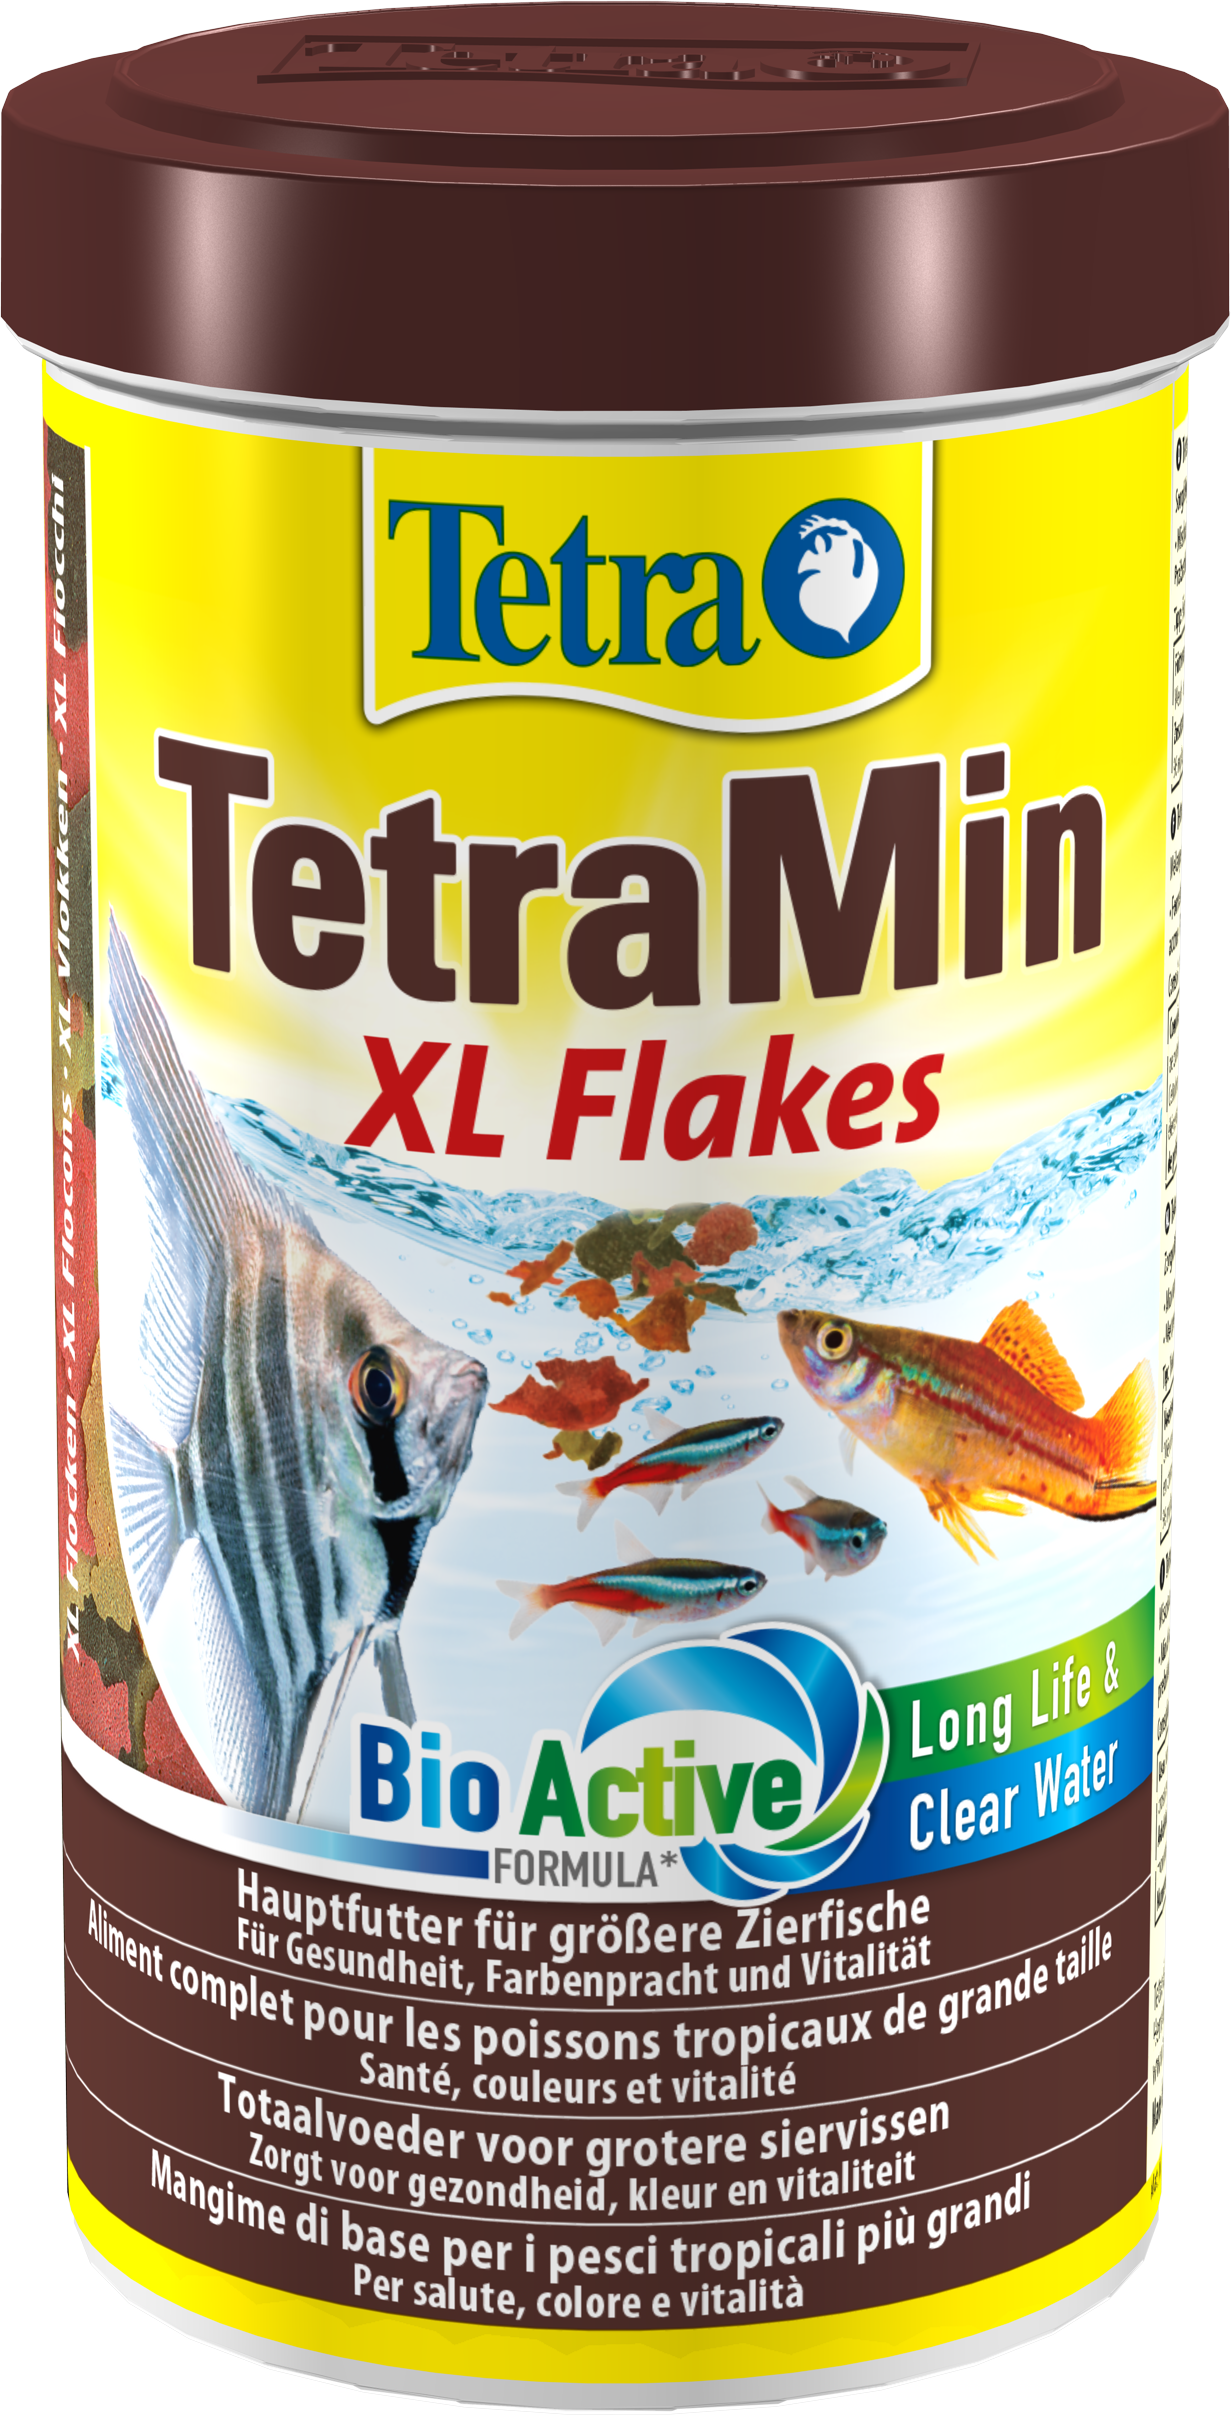 Tetra cichlid xl flakes 80gr/500ml - Produits d'alimentation (11235315)